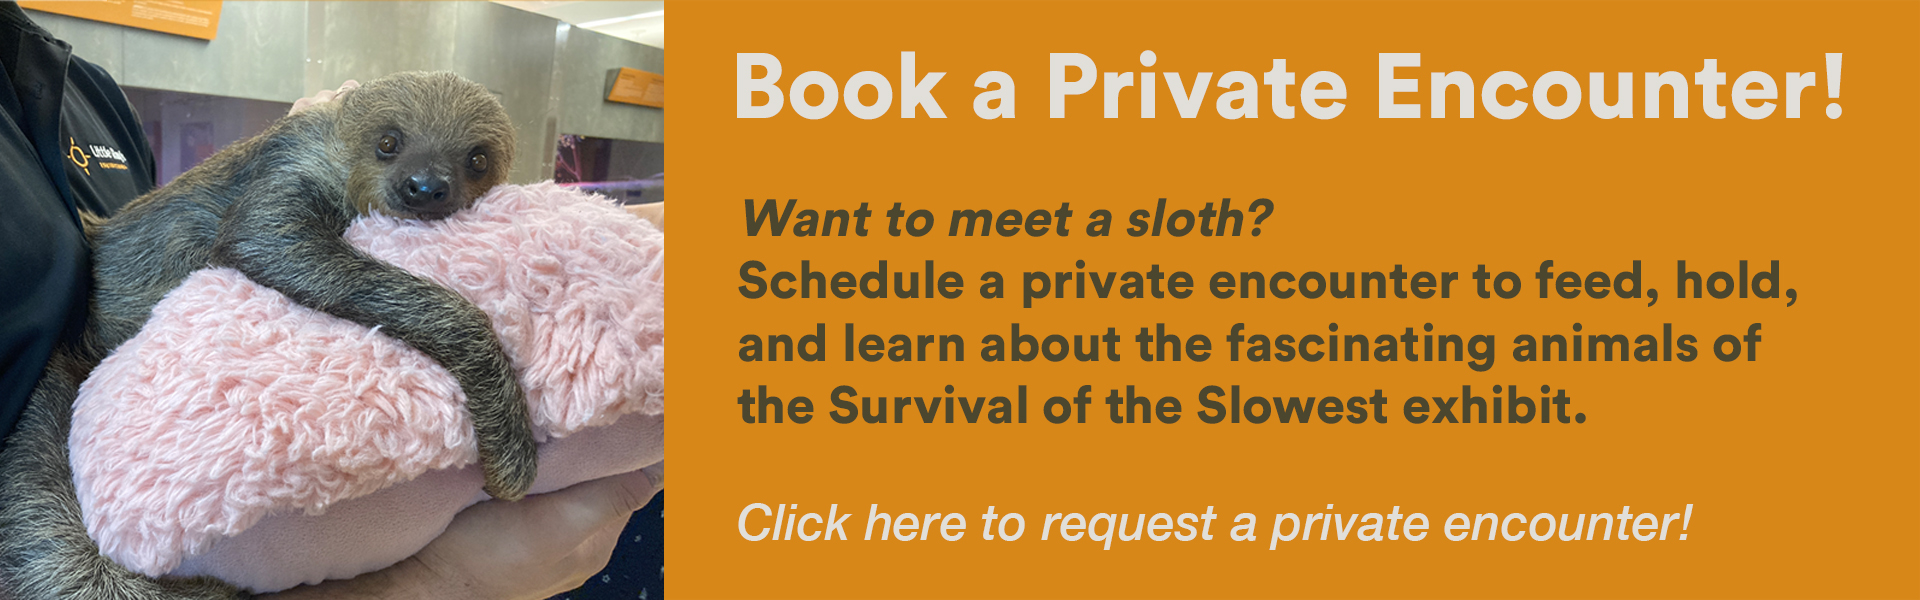 Book a Private Encounter to a meet a sloth!